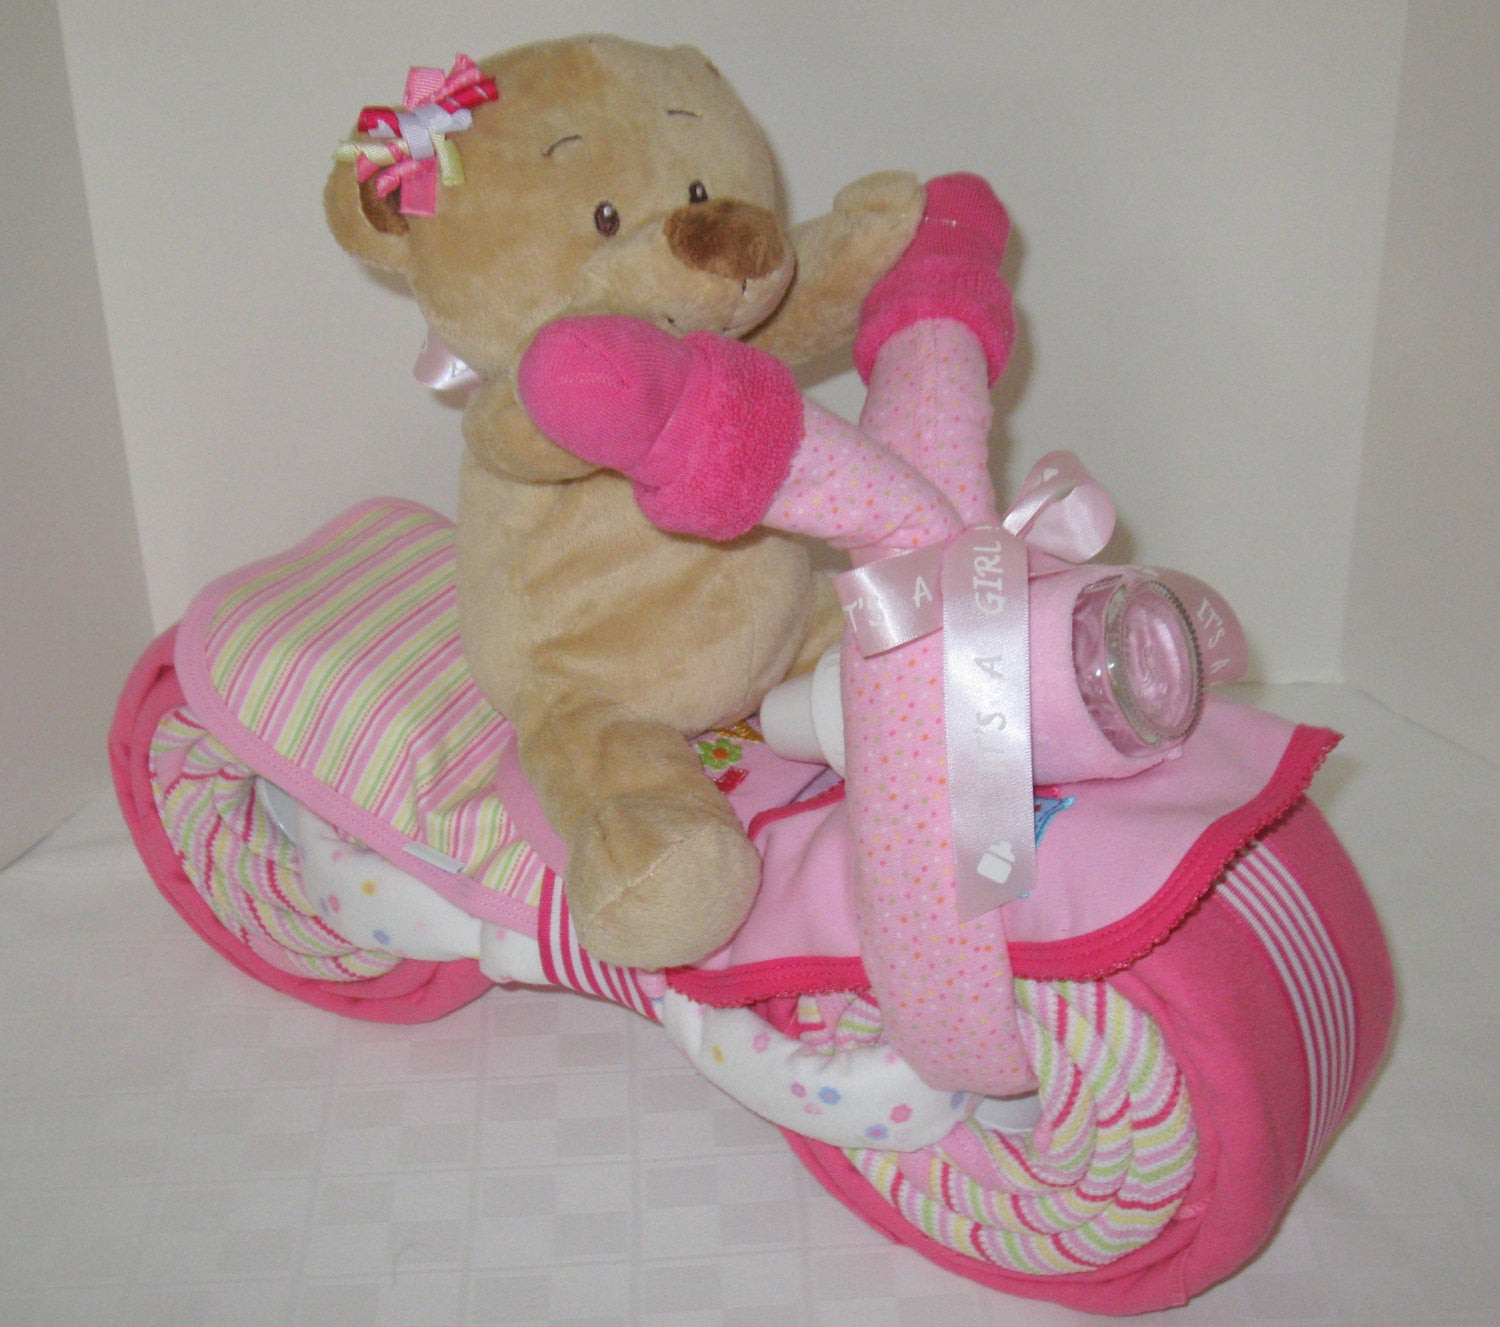 Baby Gift Ideas For Girls
 Diaper Cake Motorcycle Bike Diaper Cake Baby Shower Gift